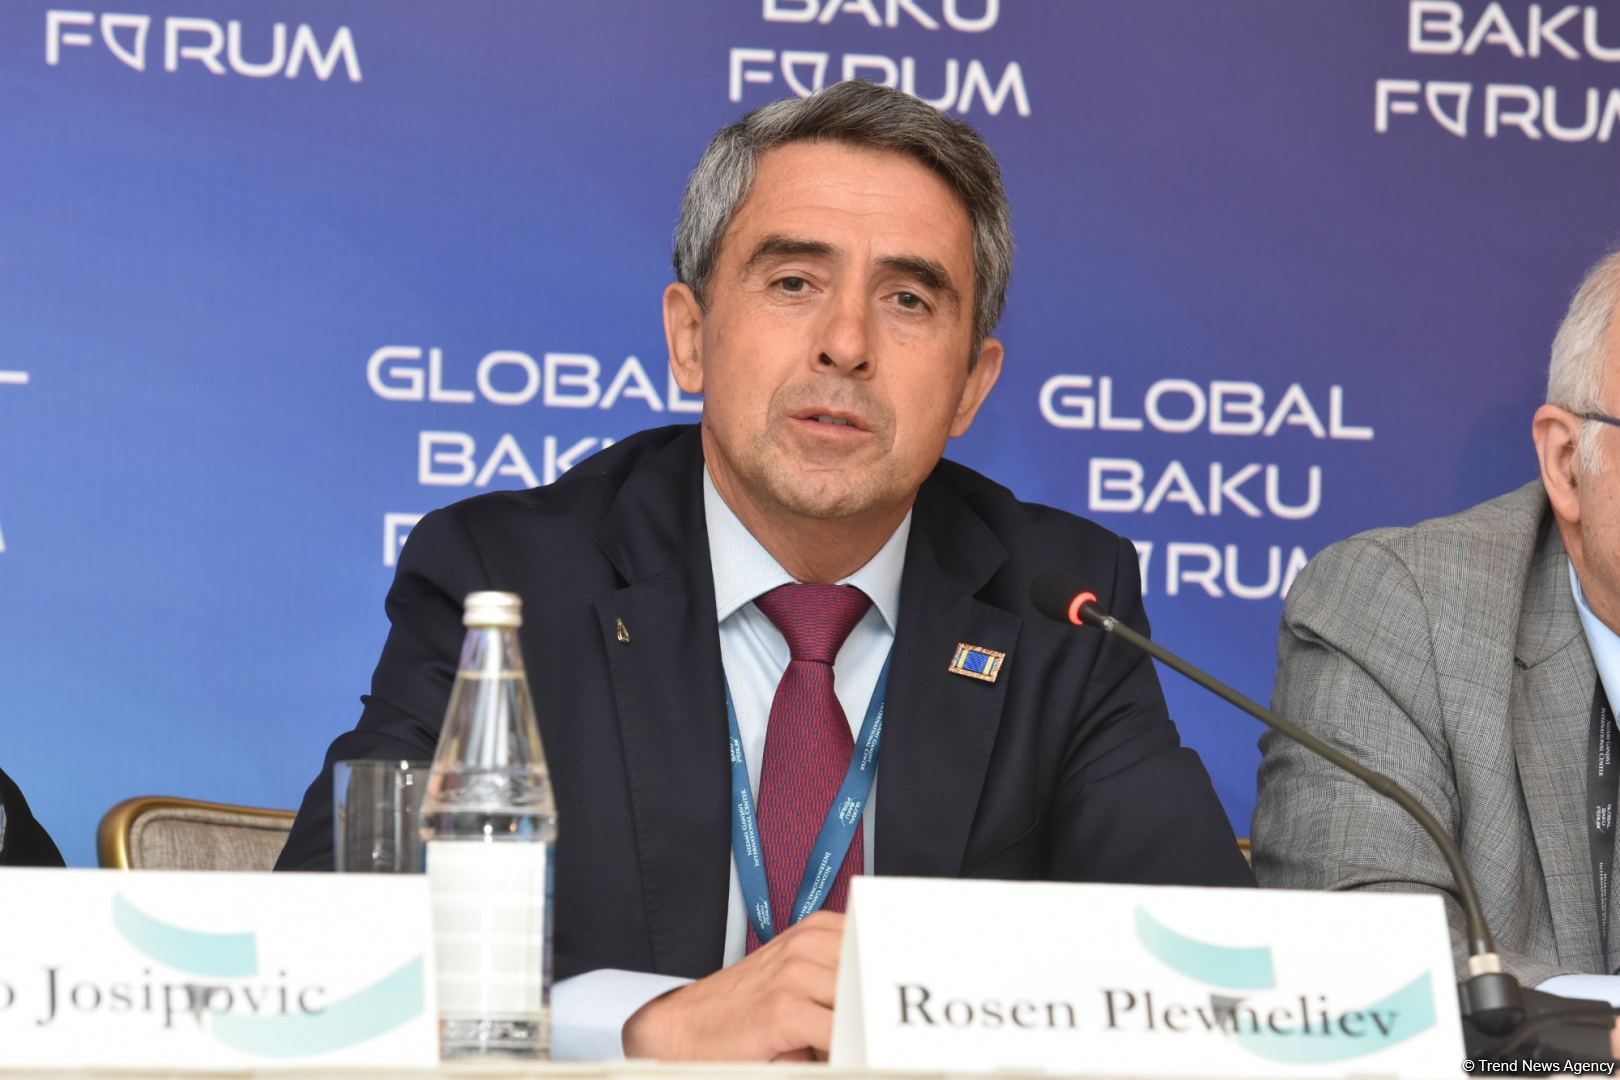 Global Baku Forum - platform for solving global problems, Bulgarian ex-president says